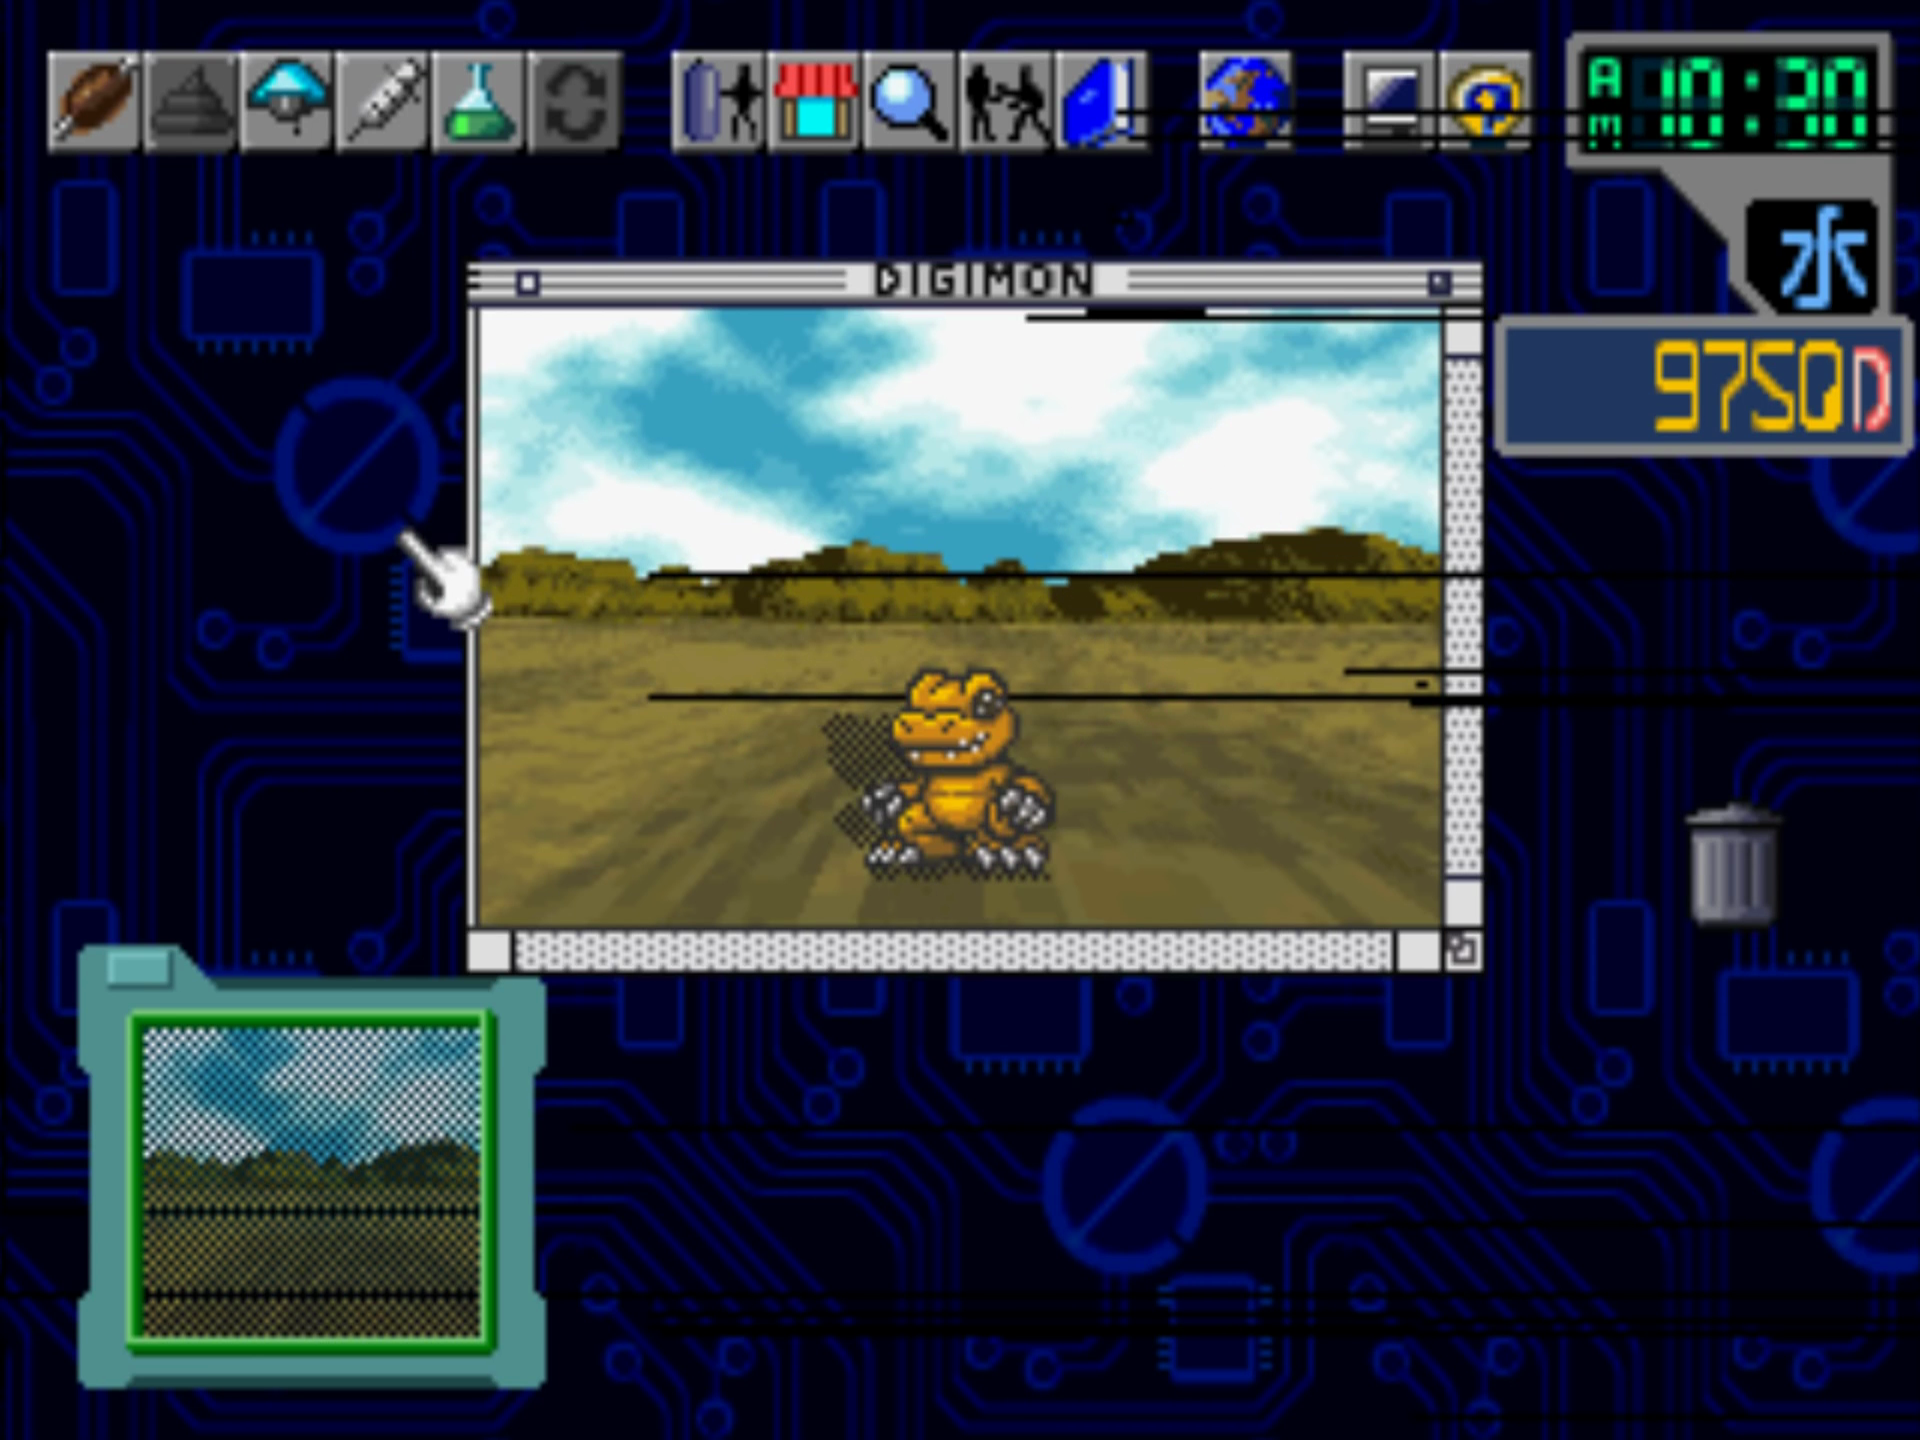 Digimon Story: Cyber Sleuth - Playstation Vita - Alvanista